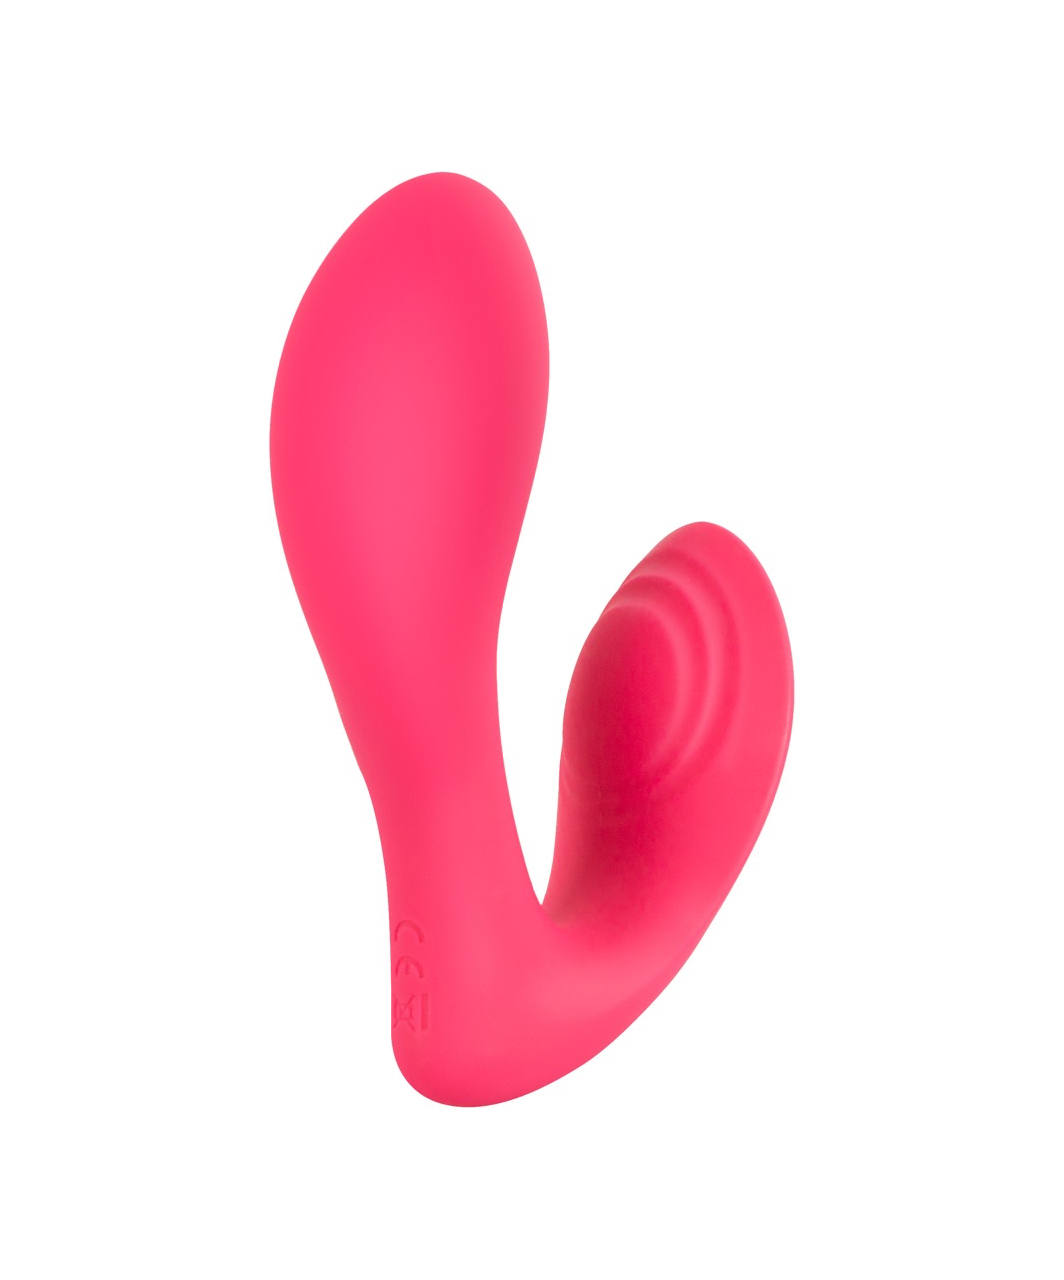 Smile G-spot Remote Control Panty vibrators